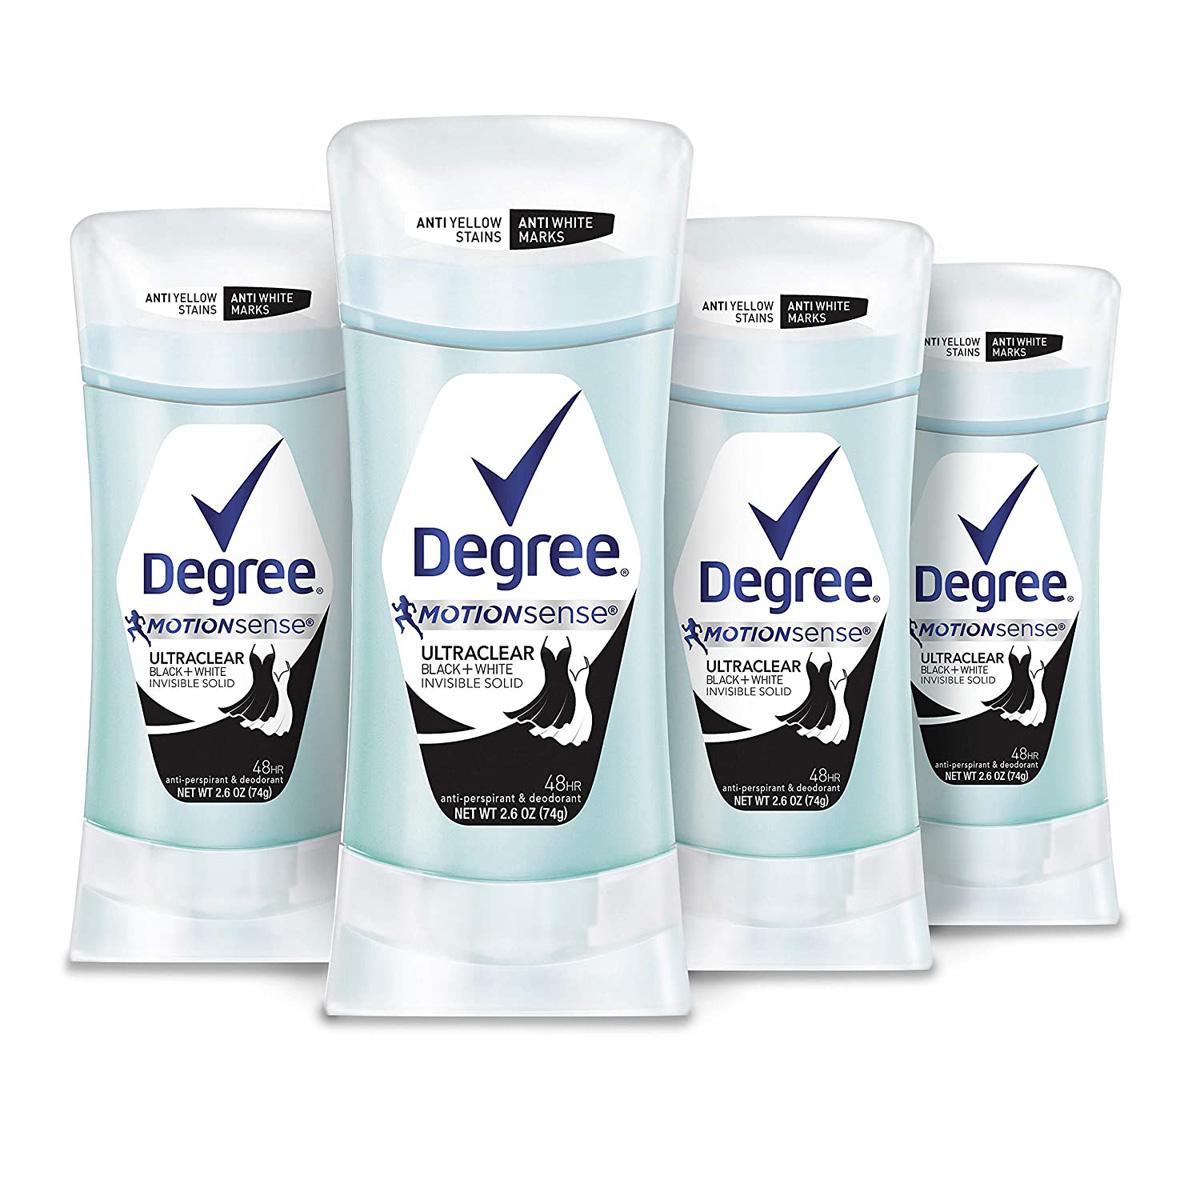 4 Degree UltraClear Antiperspirant Deodorant for $11.89 Shipped